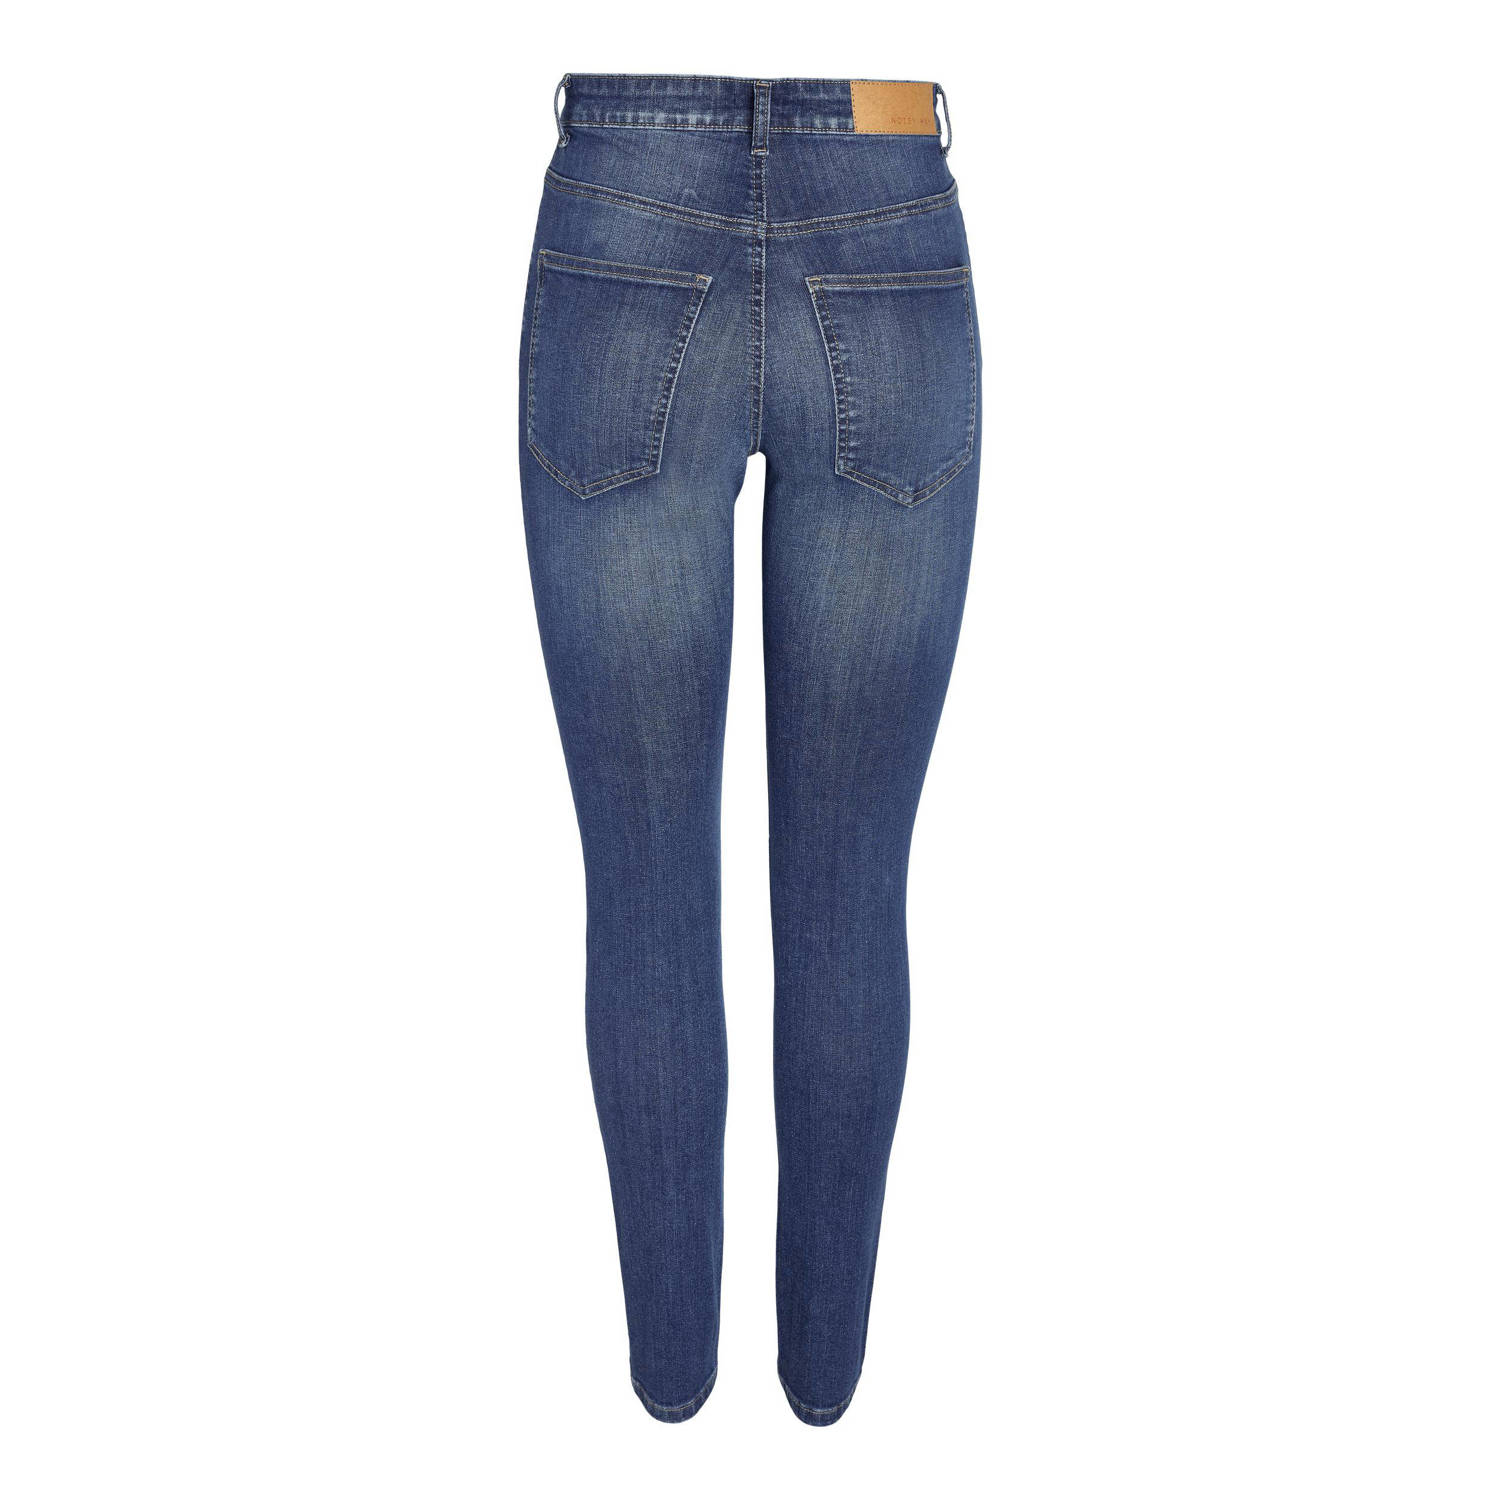 NOISY MAY high waist skinny jeans NMSATTY medium blue denim